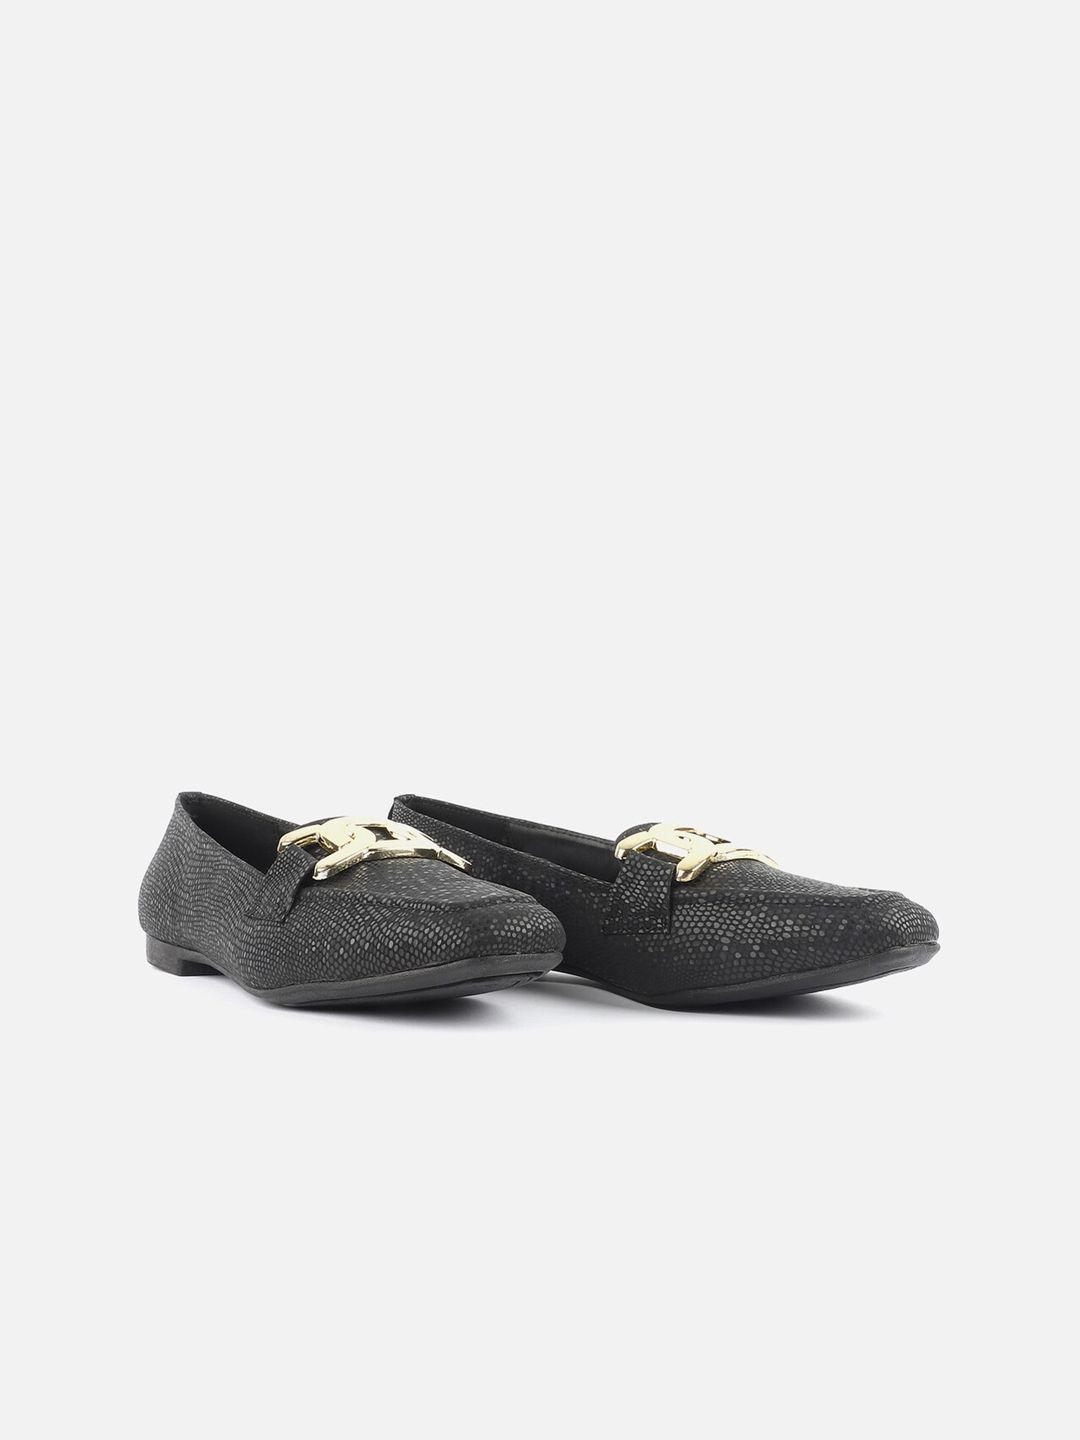 carlton-london-women-textured-comfort-insole-horsebit-loafers